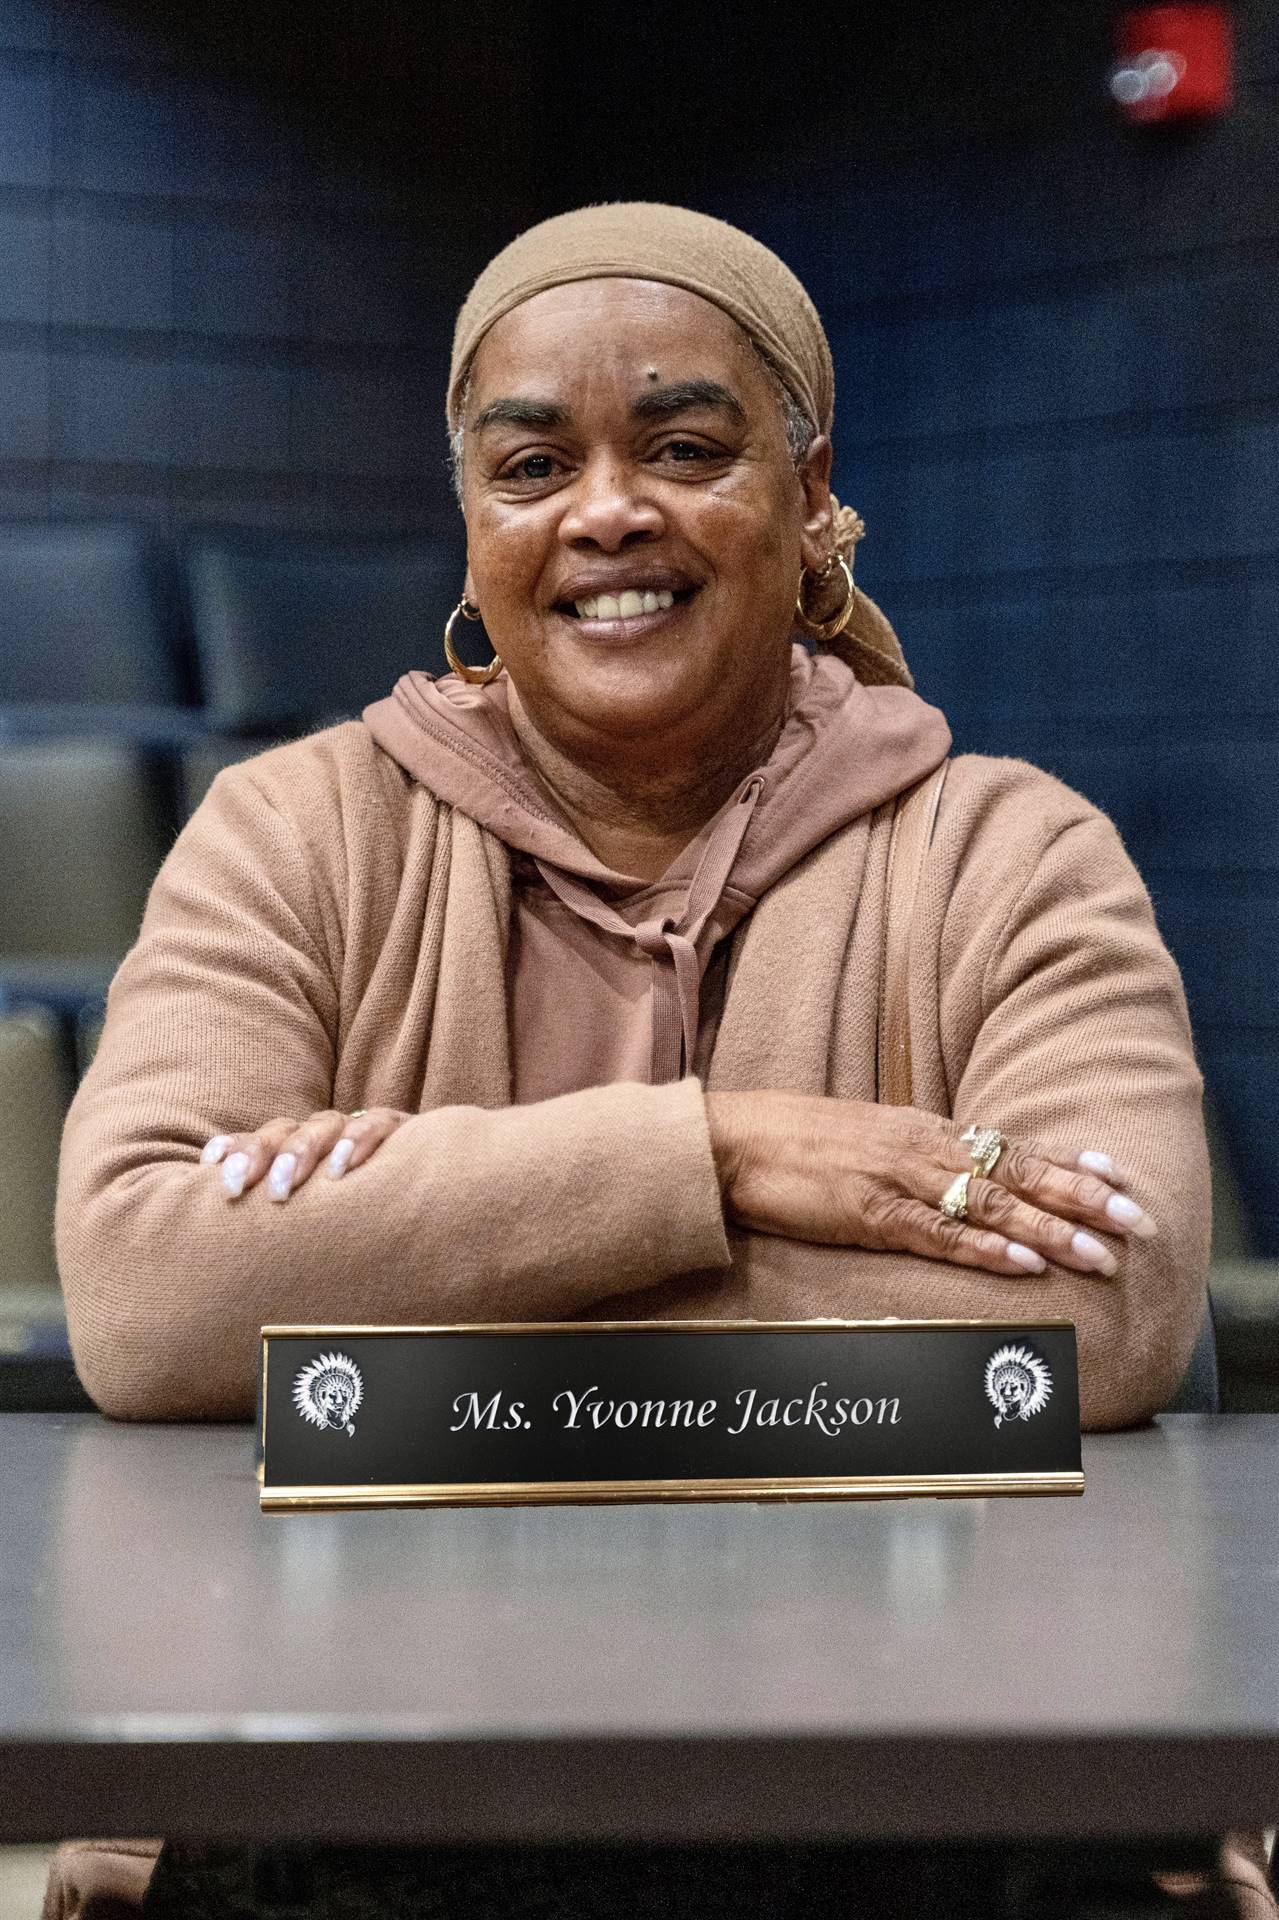 Ms. Yvonne Jackson - yjackson@goquips.org